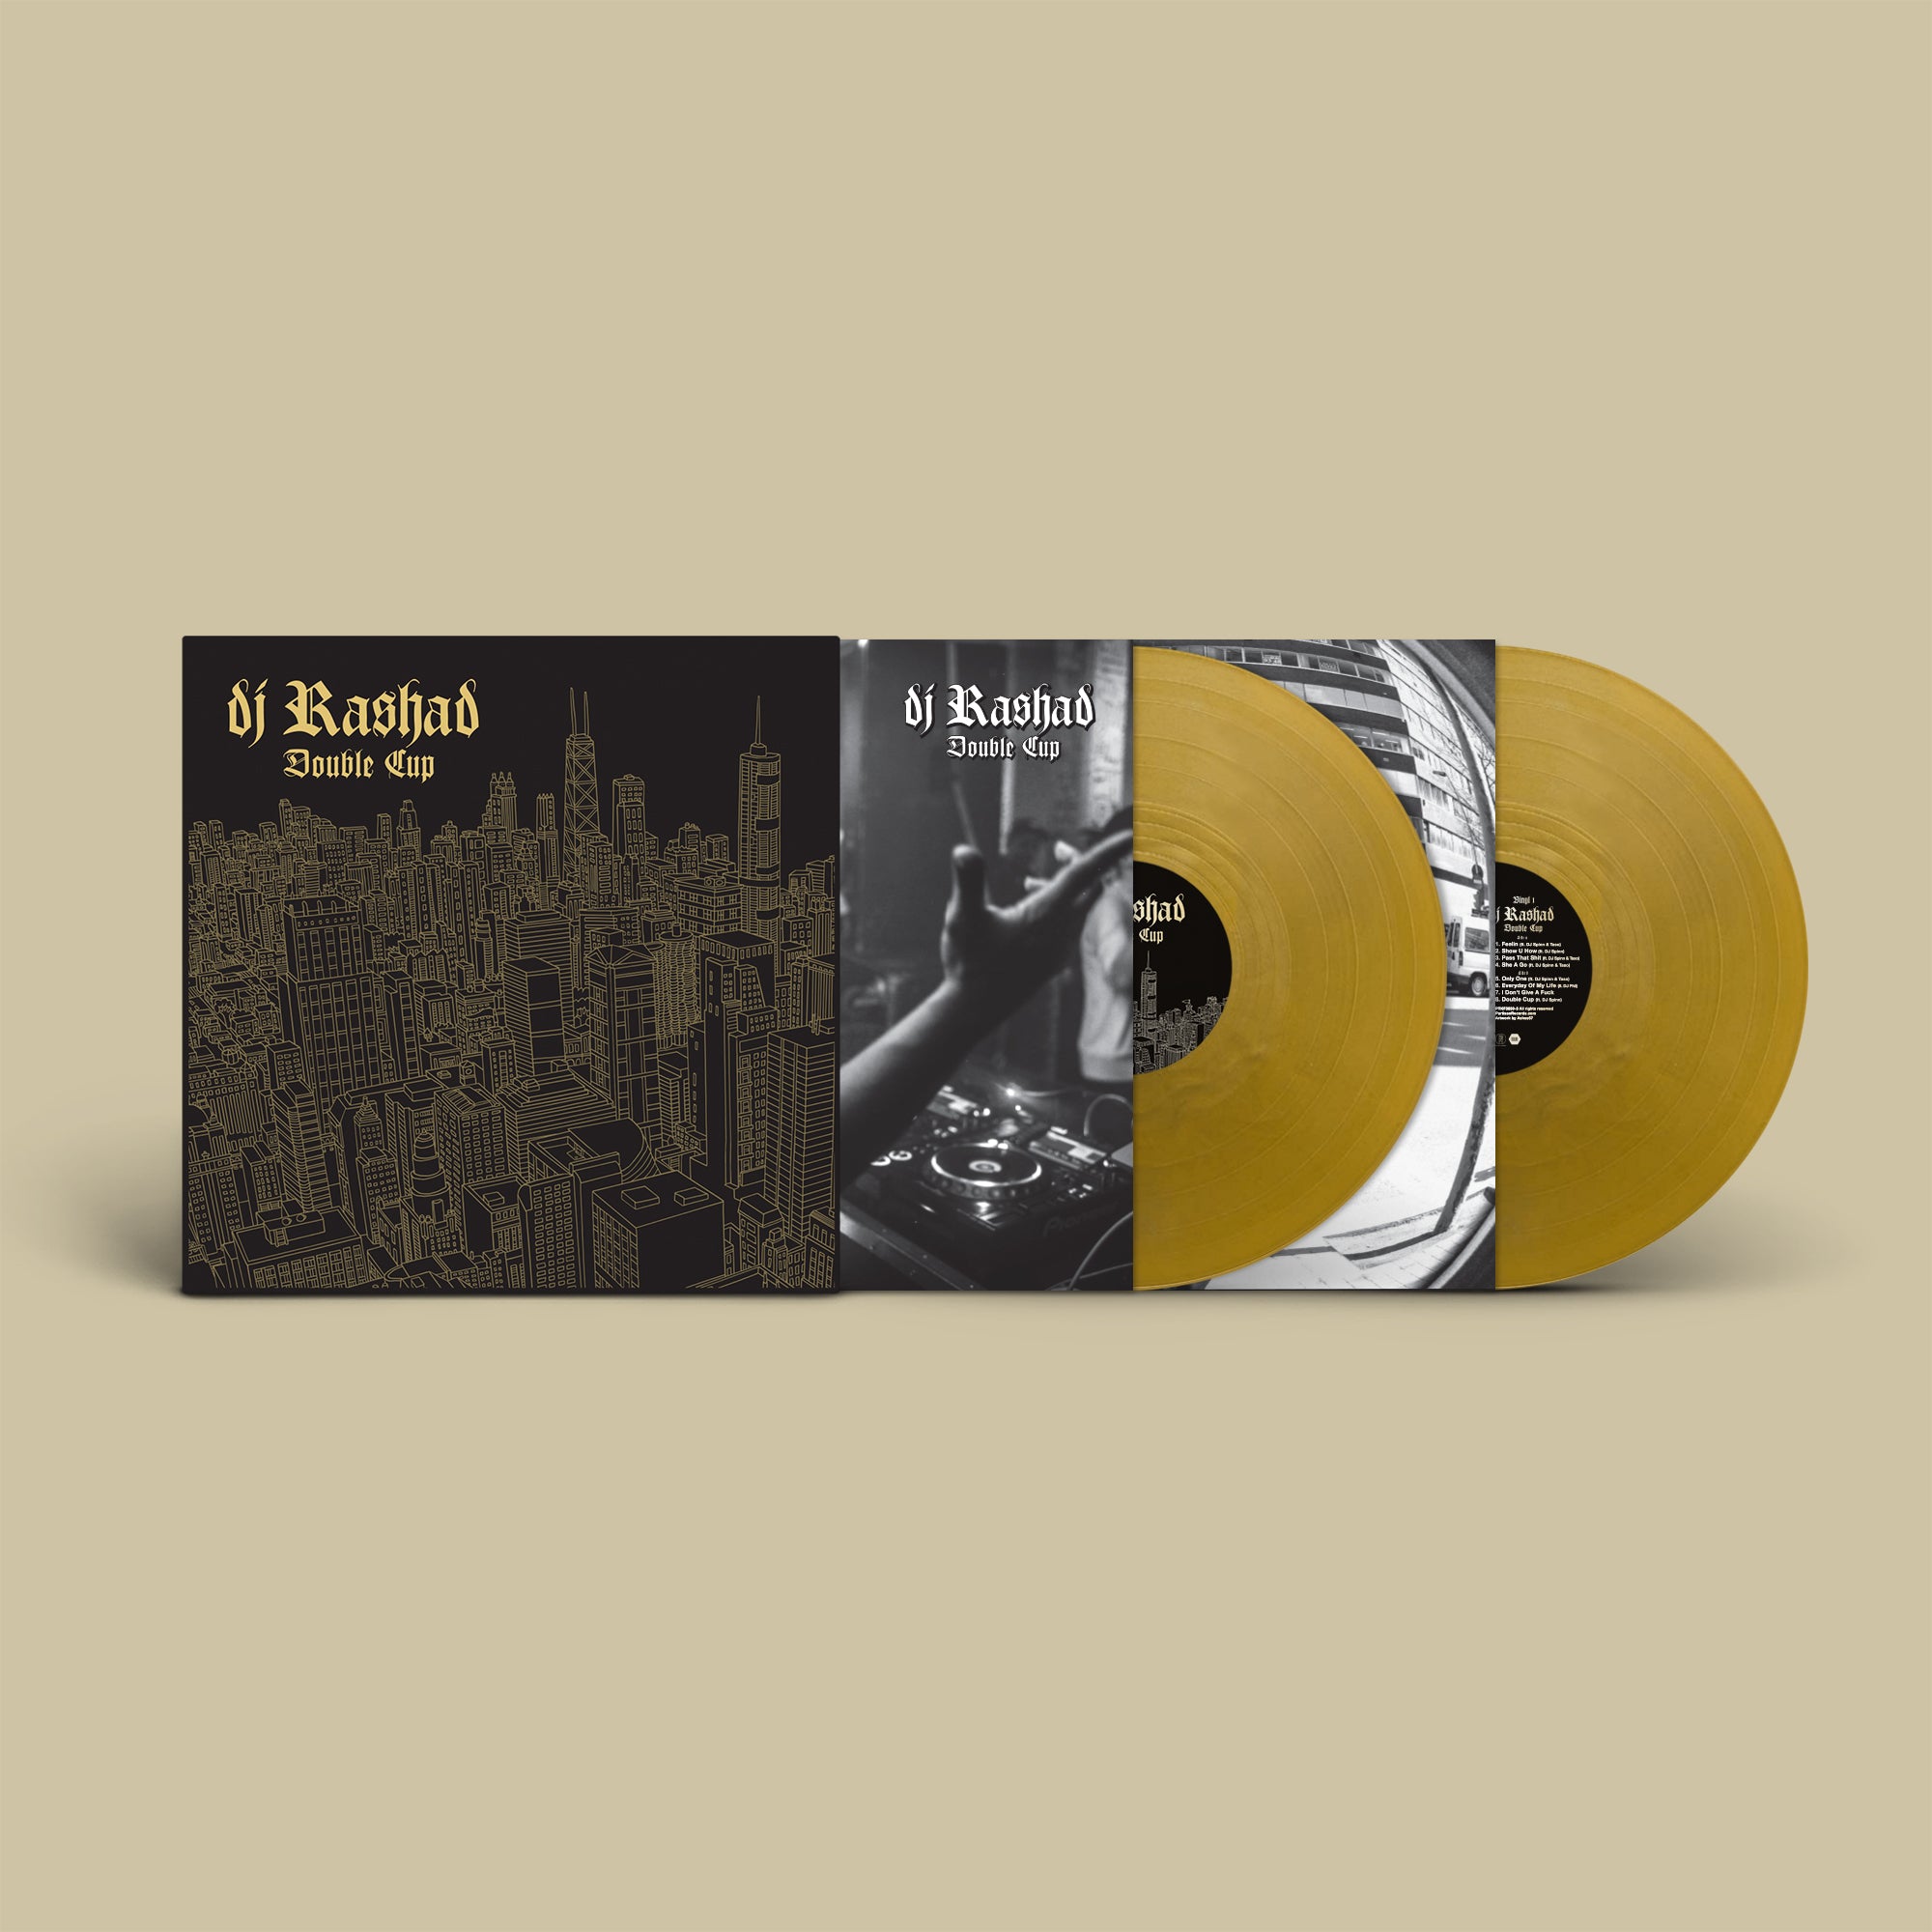 DJ Rashad - Double Cup (10 Year Anniversary): Limited Gold Vinyl LP